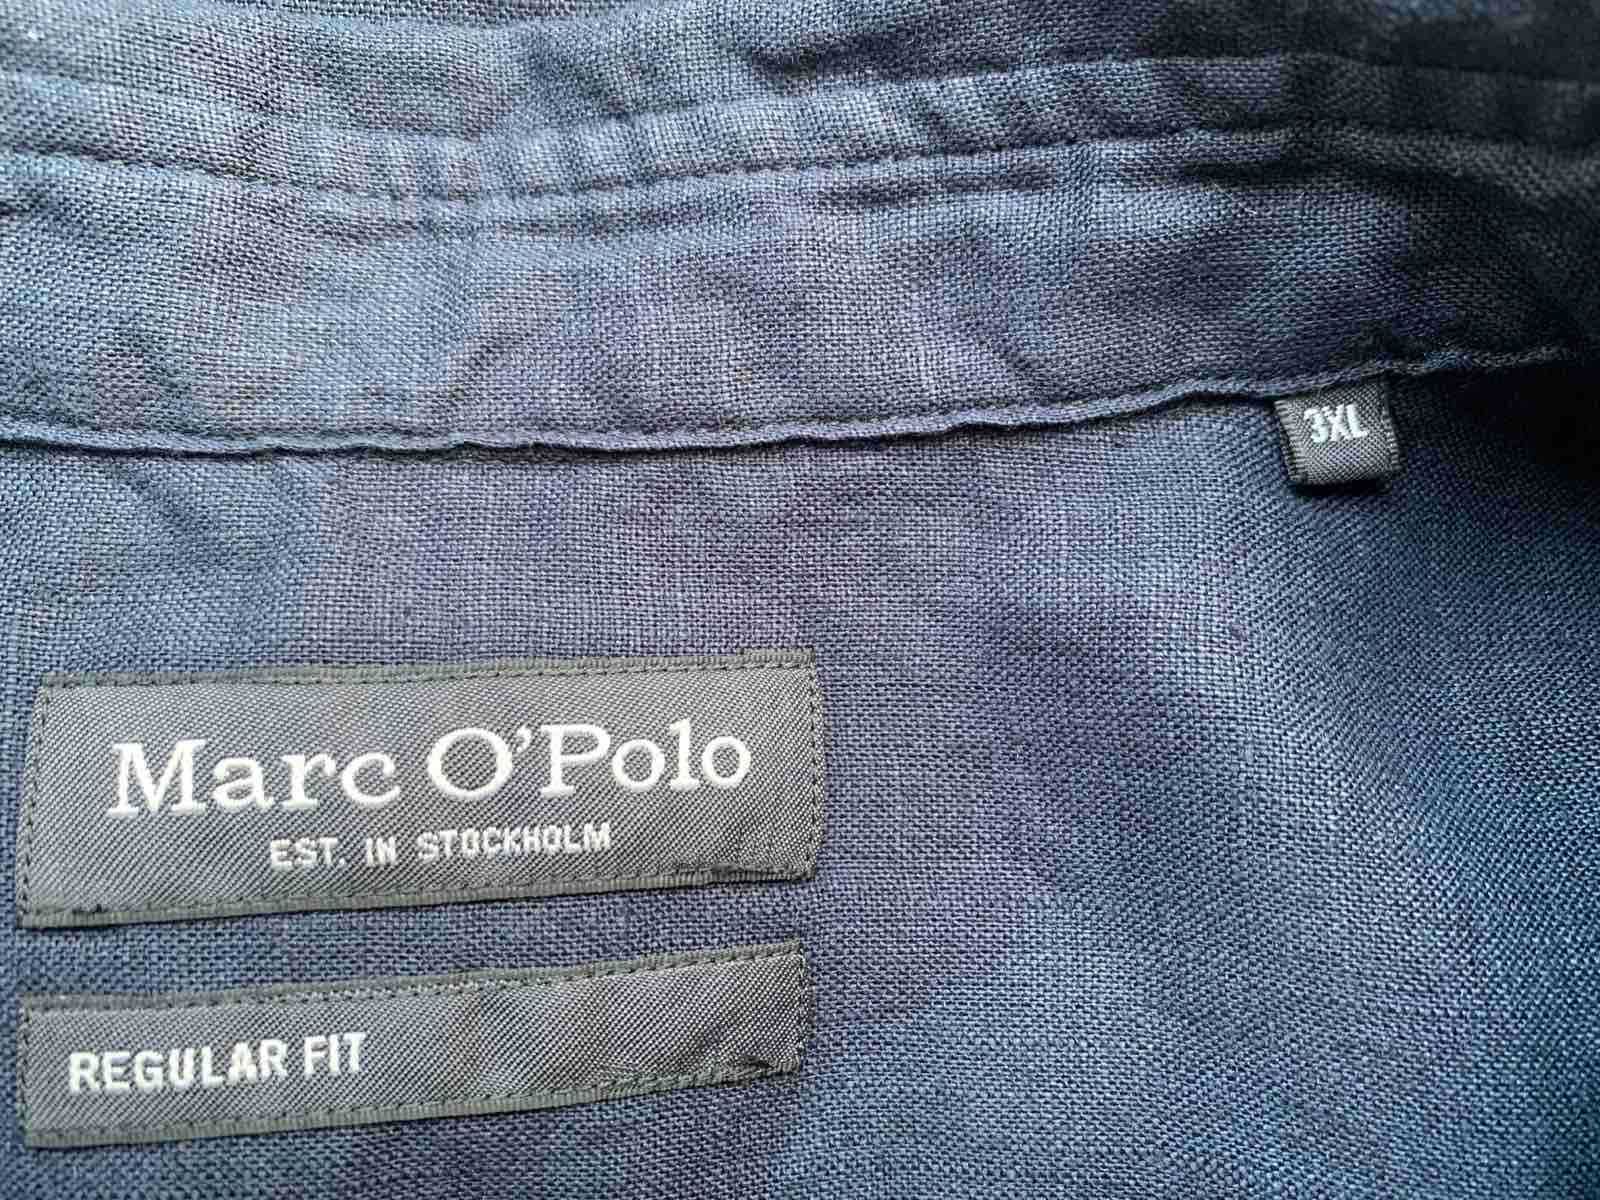 Marc O'Polo мужская  рубашка с коротким рукавом, лен. Большой размер.